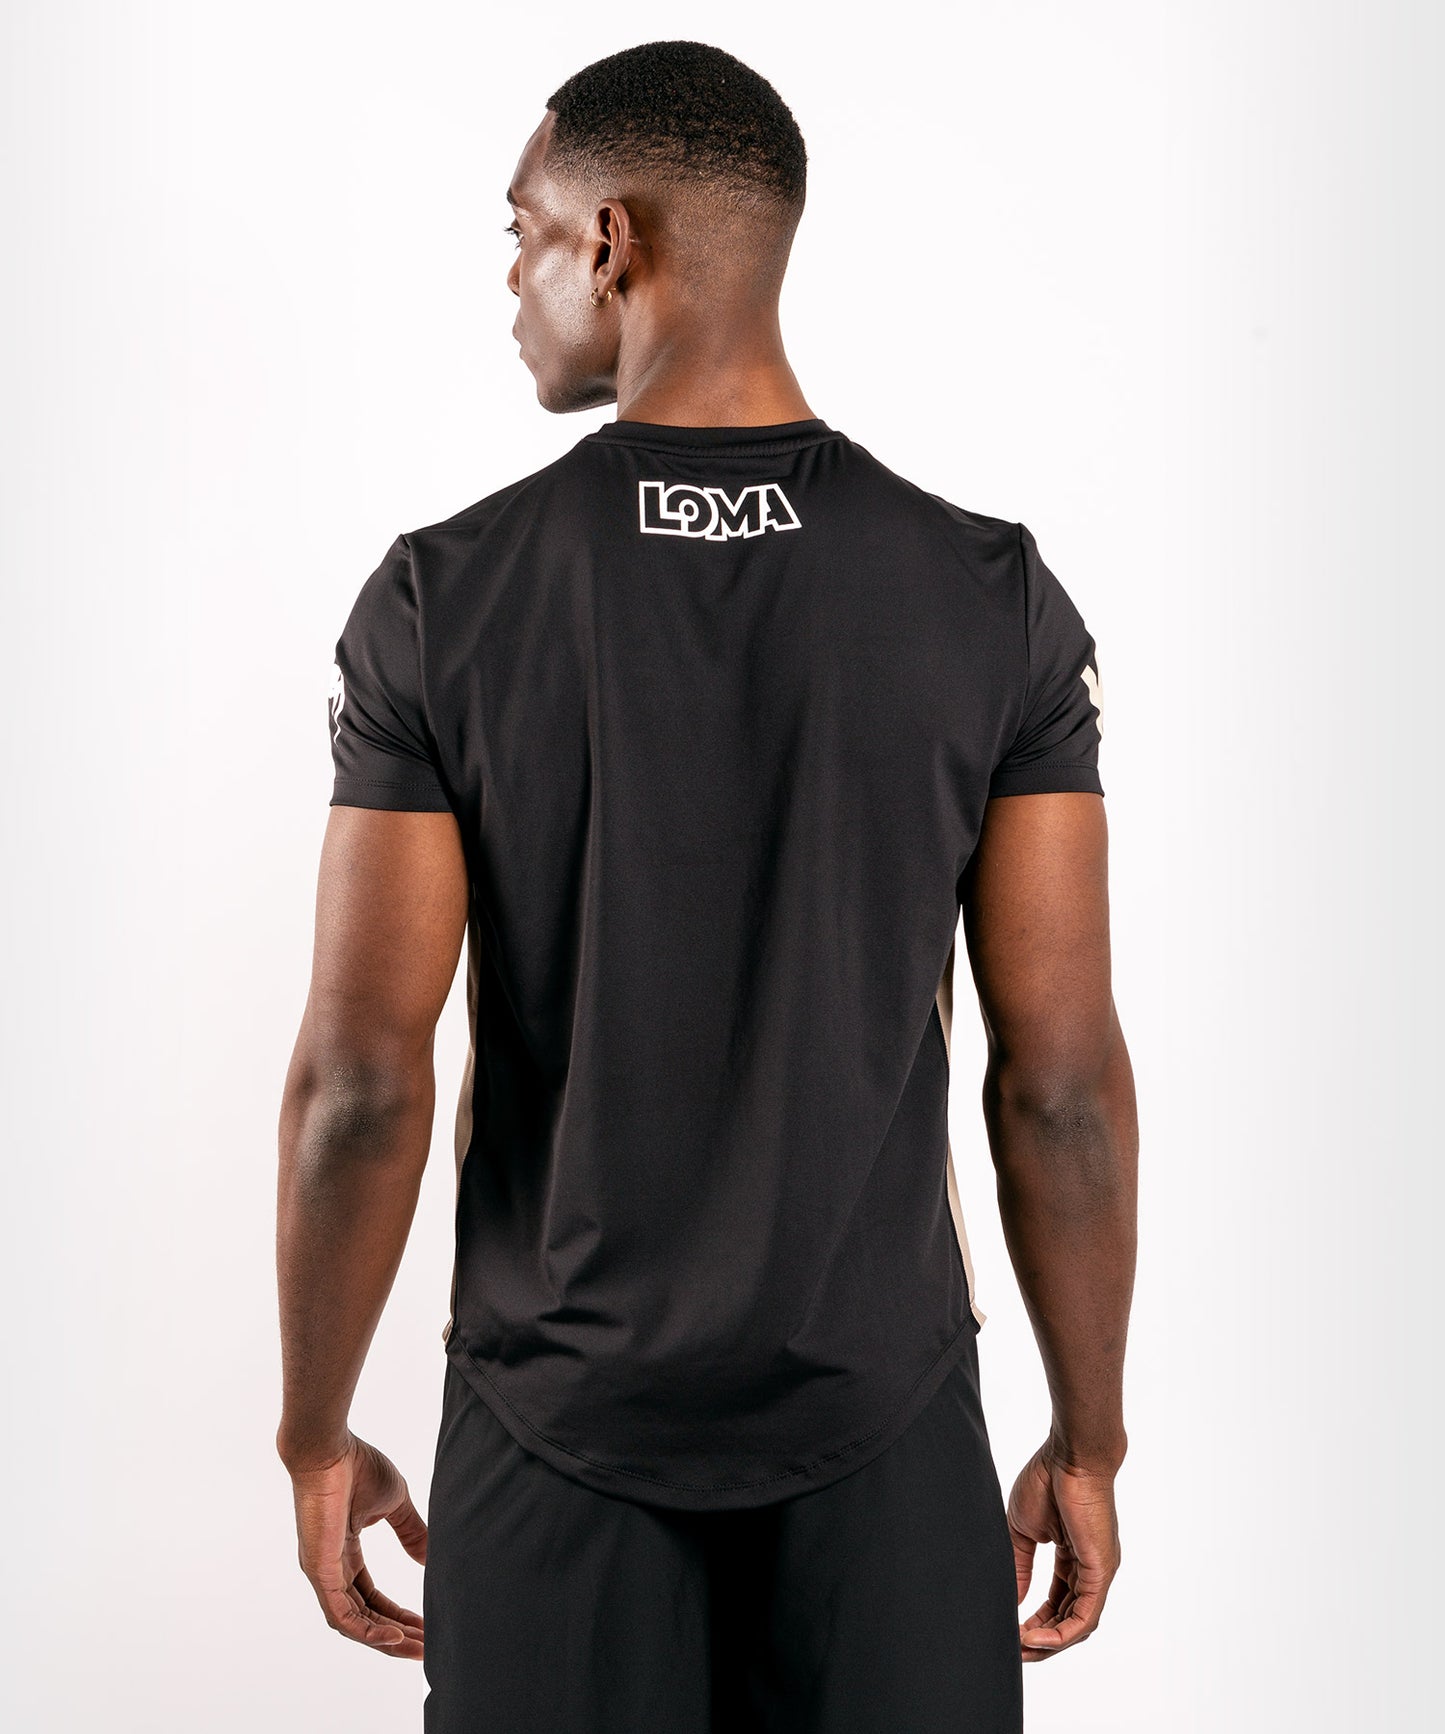 Venum Origins Dry Tech T-shirt - Black/White